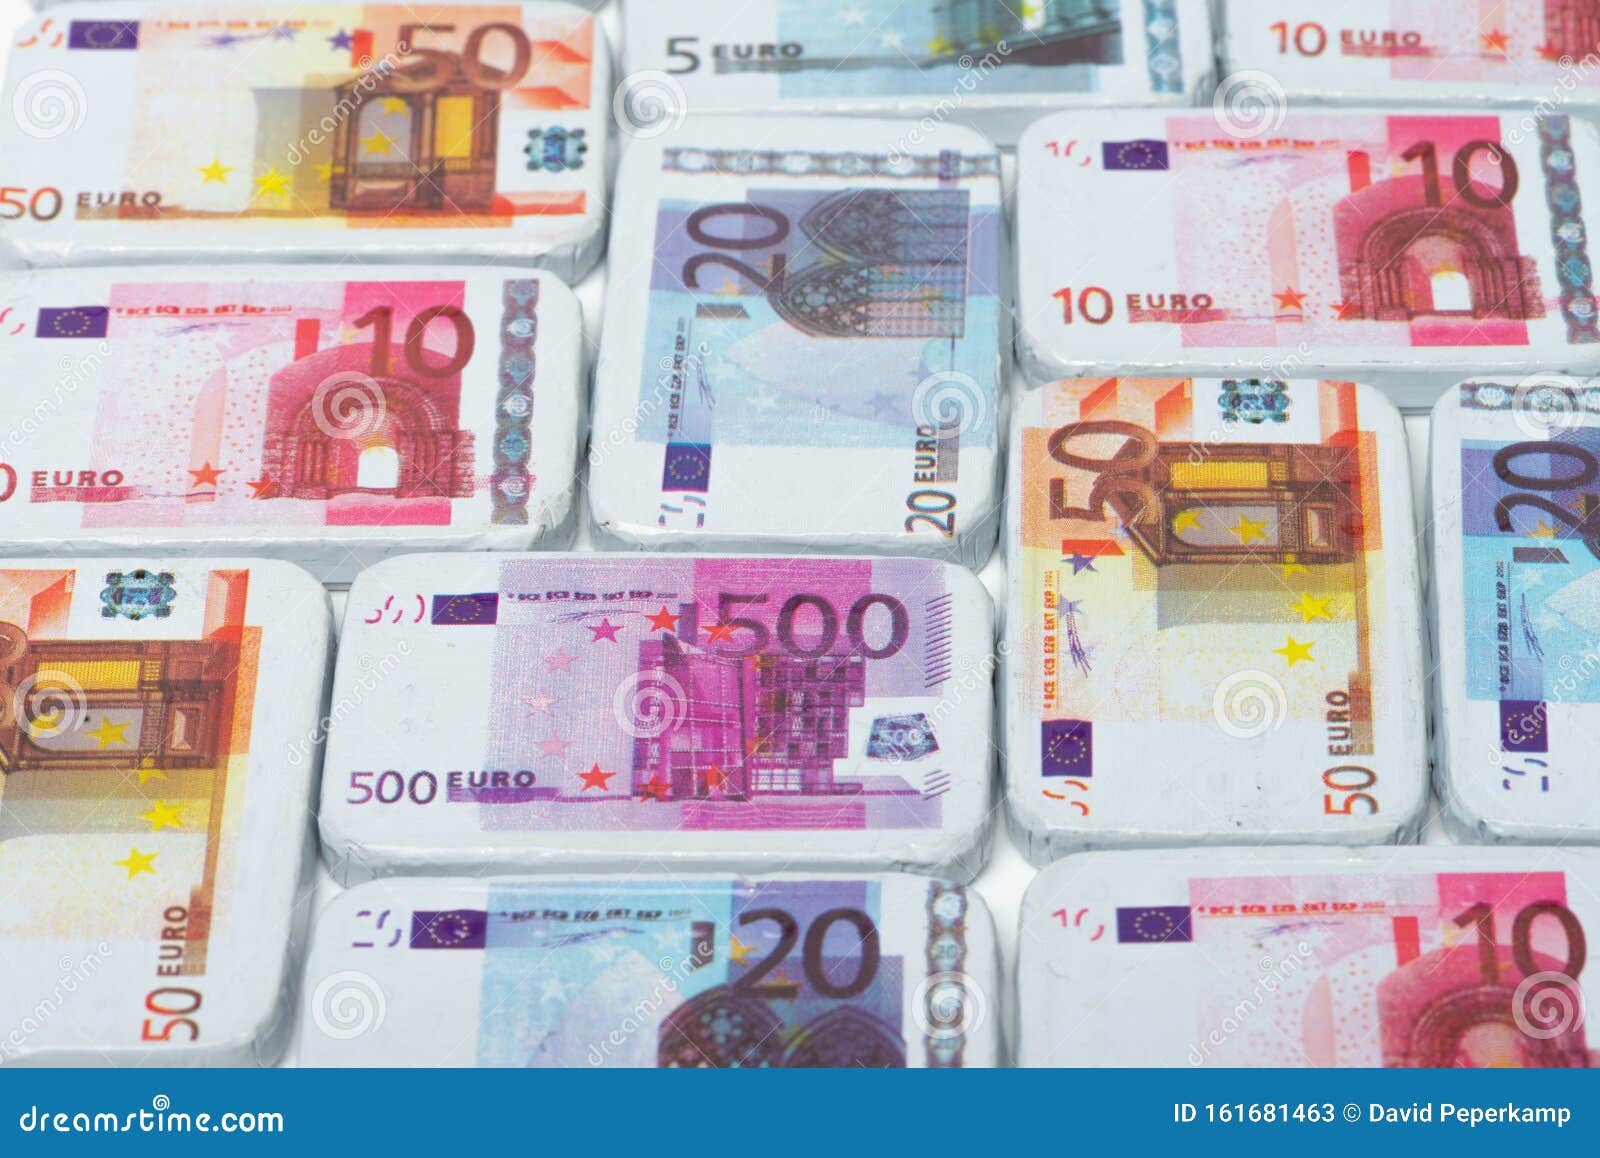 geboren verkrachting leerling Chocolate Banknote of 5, 10, 20, 50. 500 Euros, Money, Candy, Sweets,  Sinterklaas, Typical Dutch Stock Image - Image of coin, eaten: 161681463